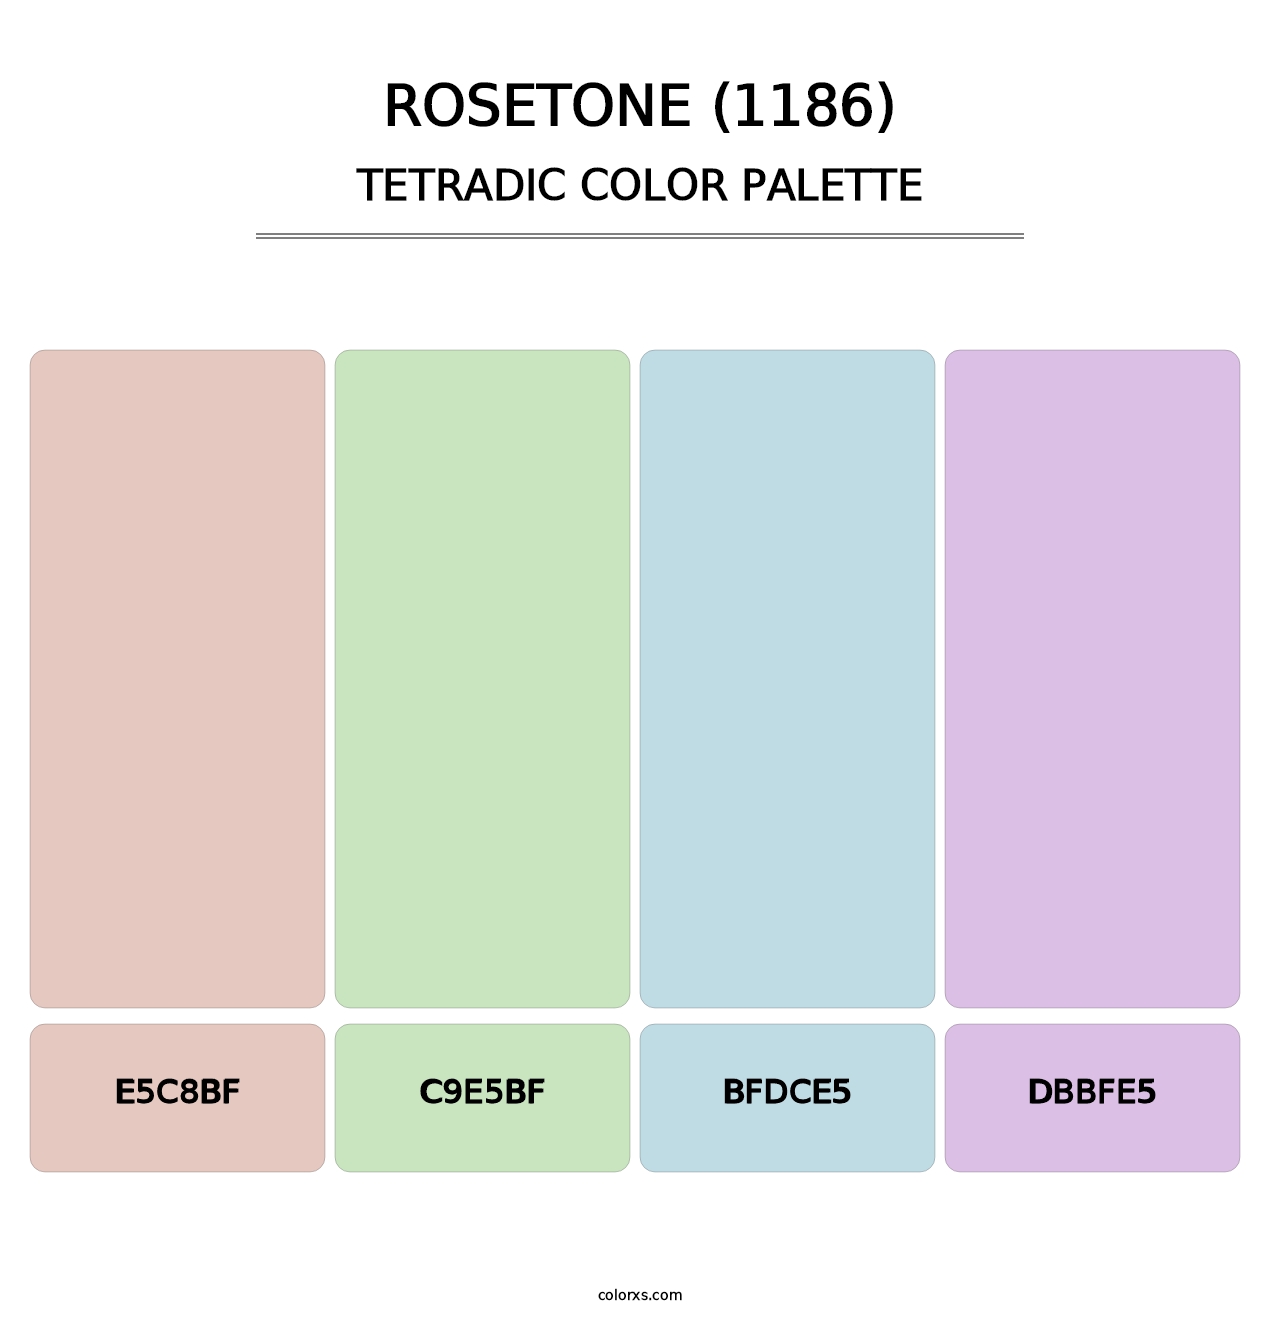 Rosetone (1186) - Tetradic Color Palette